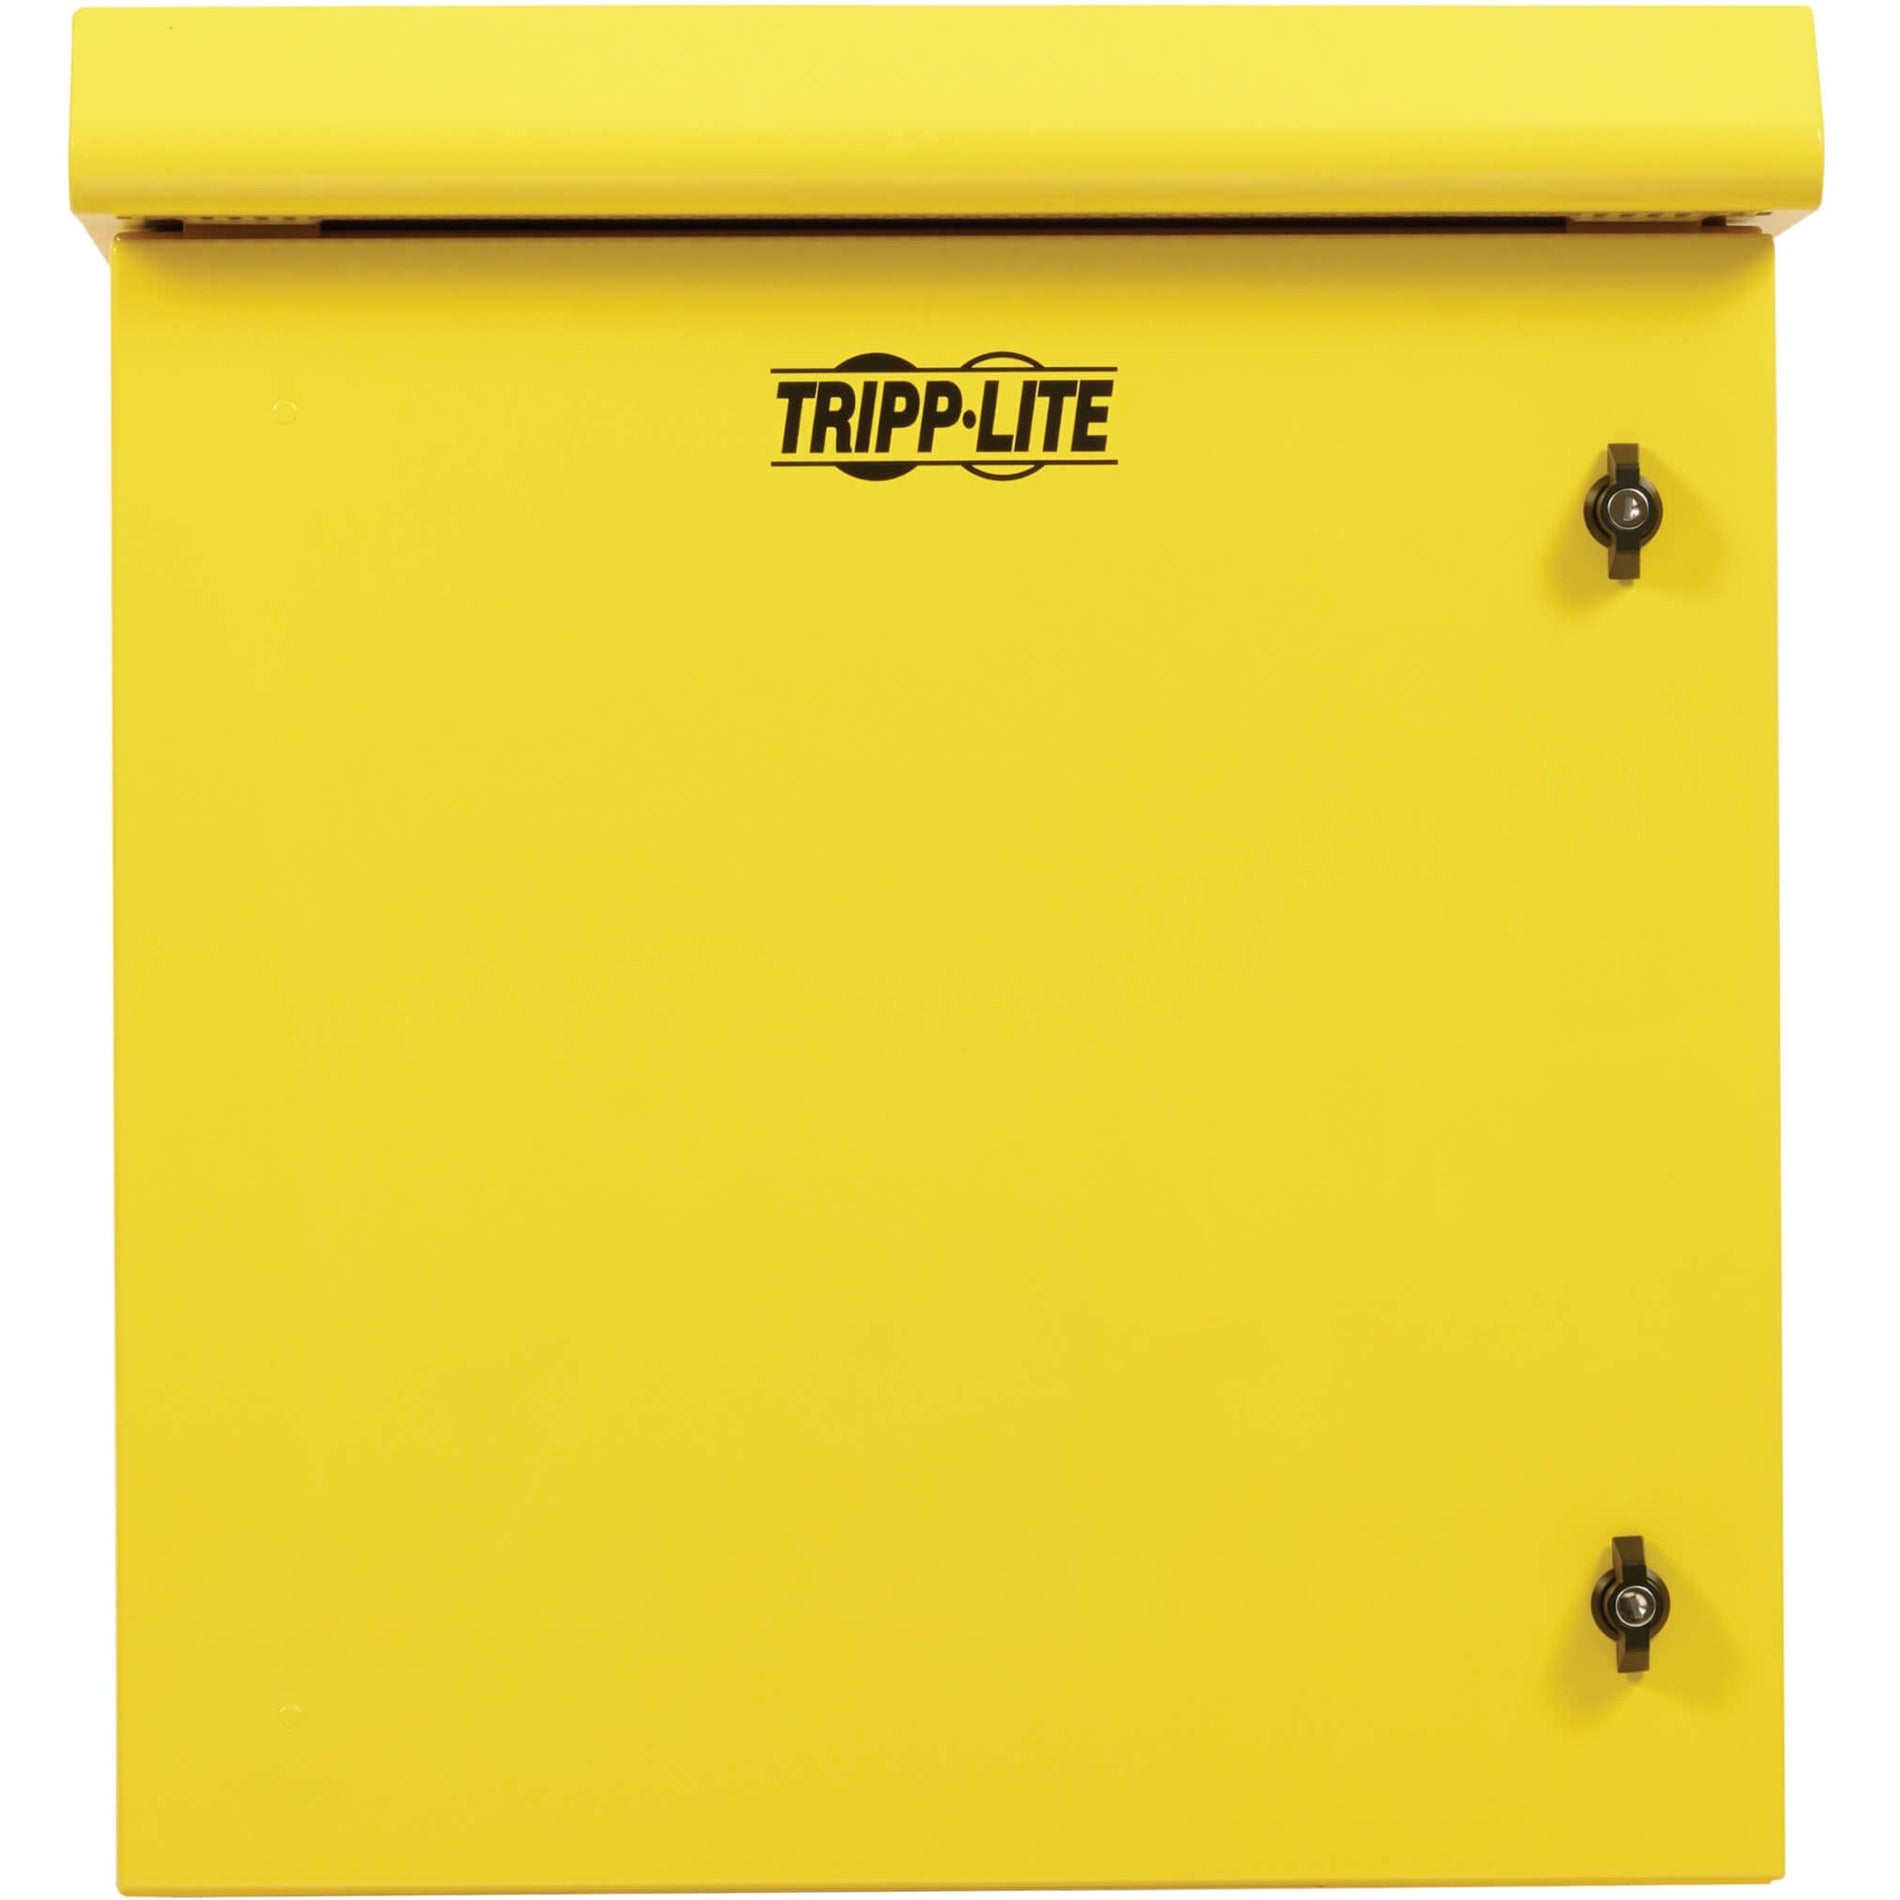 Tripp Lite SRN3RY12US SmartRack Industrial Enclosure Wall Mountable 12U Rack Height Yellow